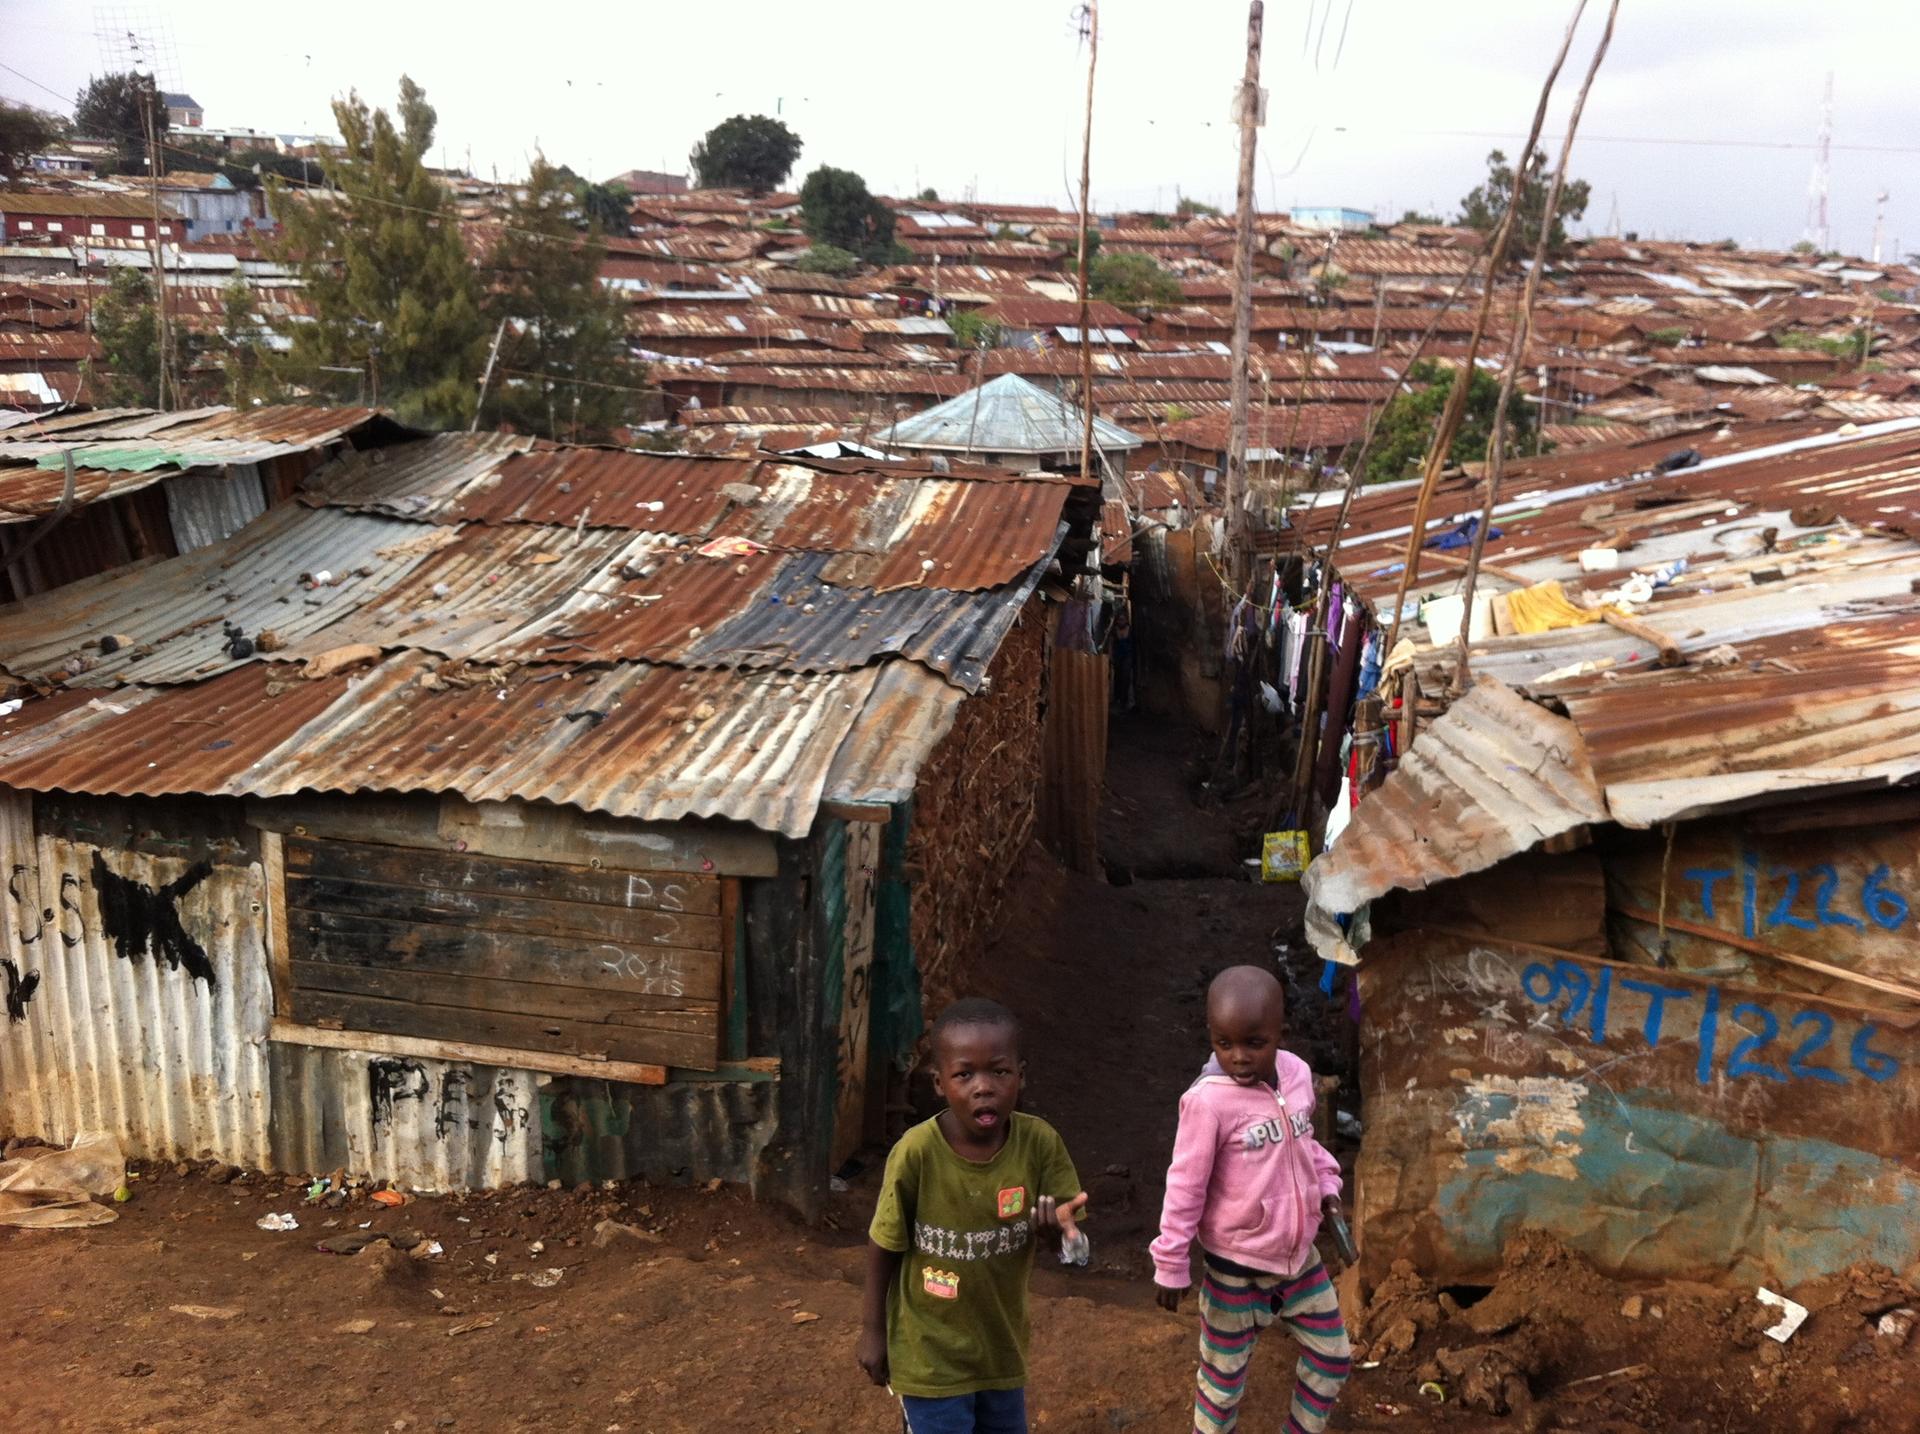 A view of Kibera, a slum of Nairobi.